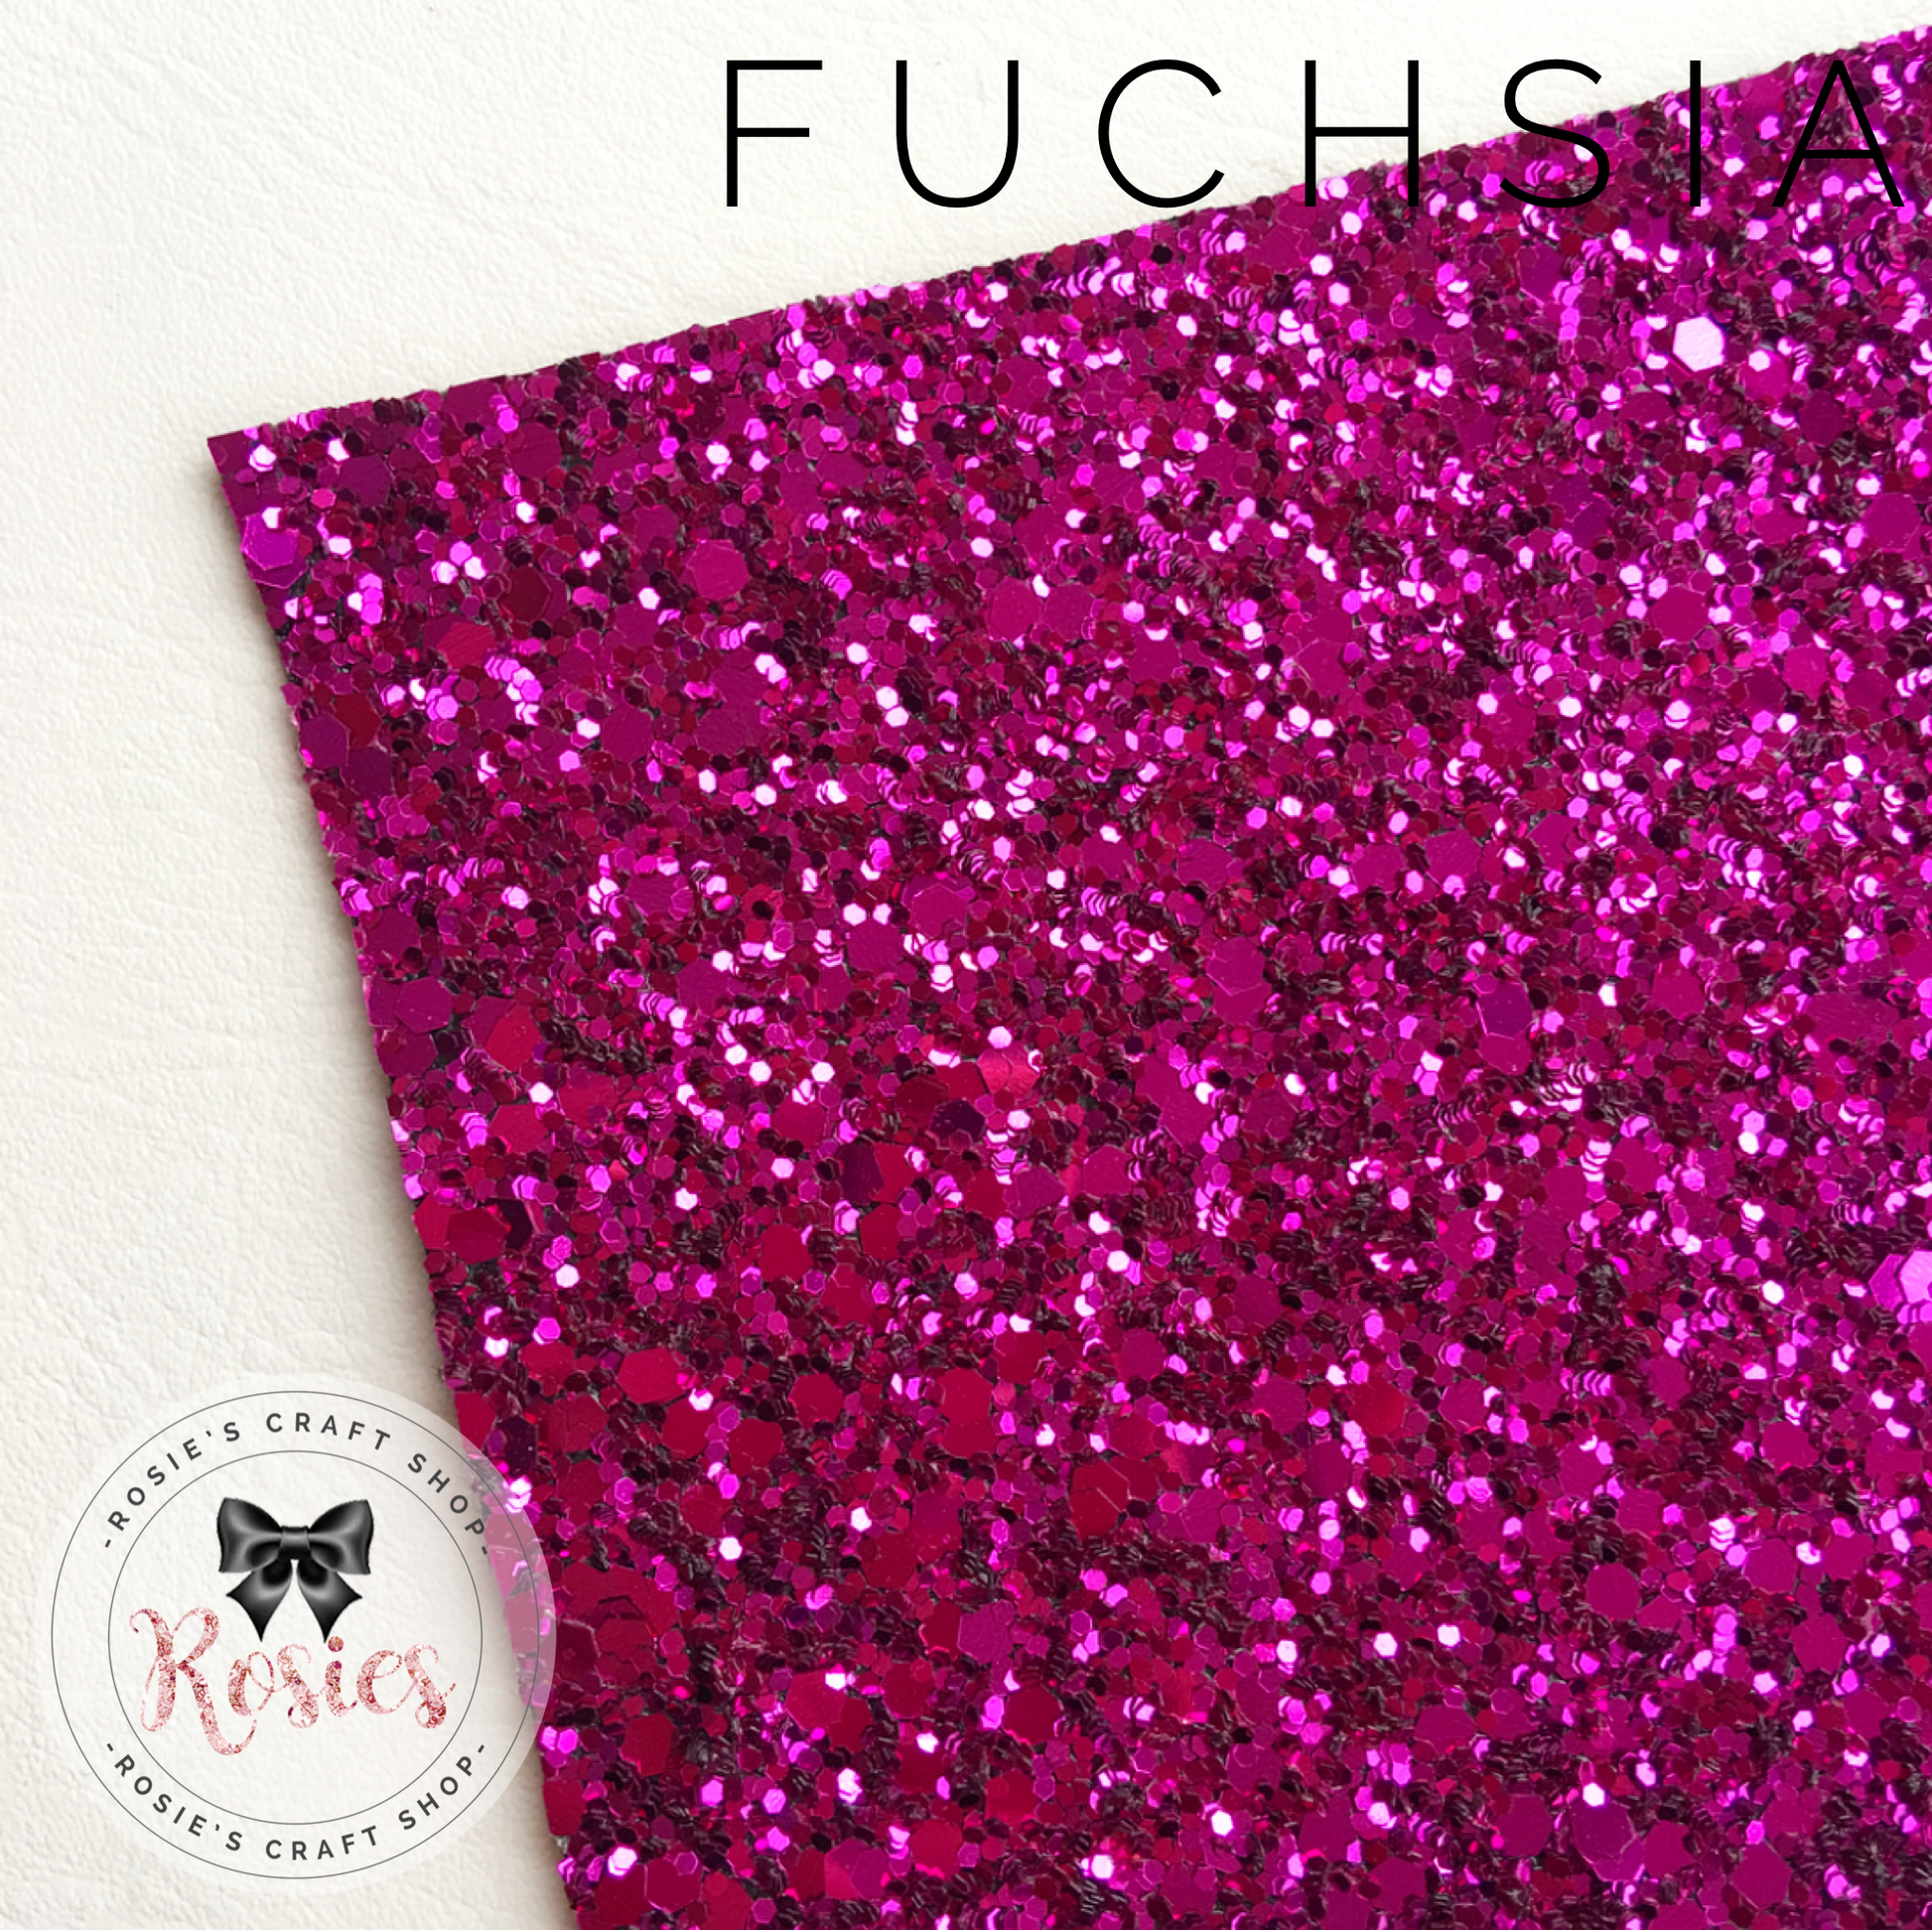 Fuchsia Pink Luxury Chunky Glitter Fabric - Classic Collection - Rosie's Craft Shop Ltd